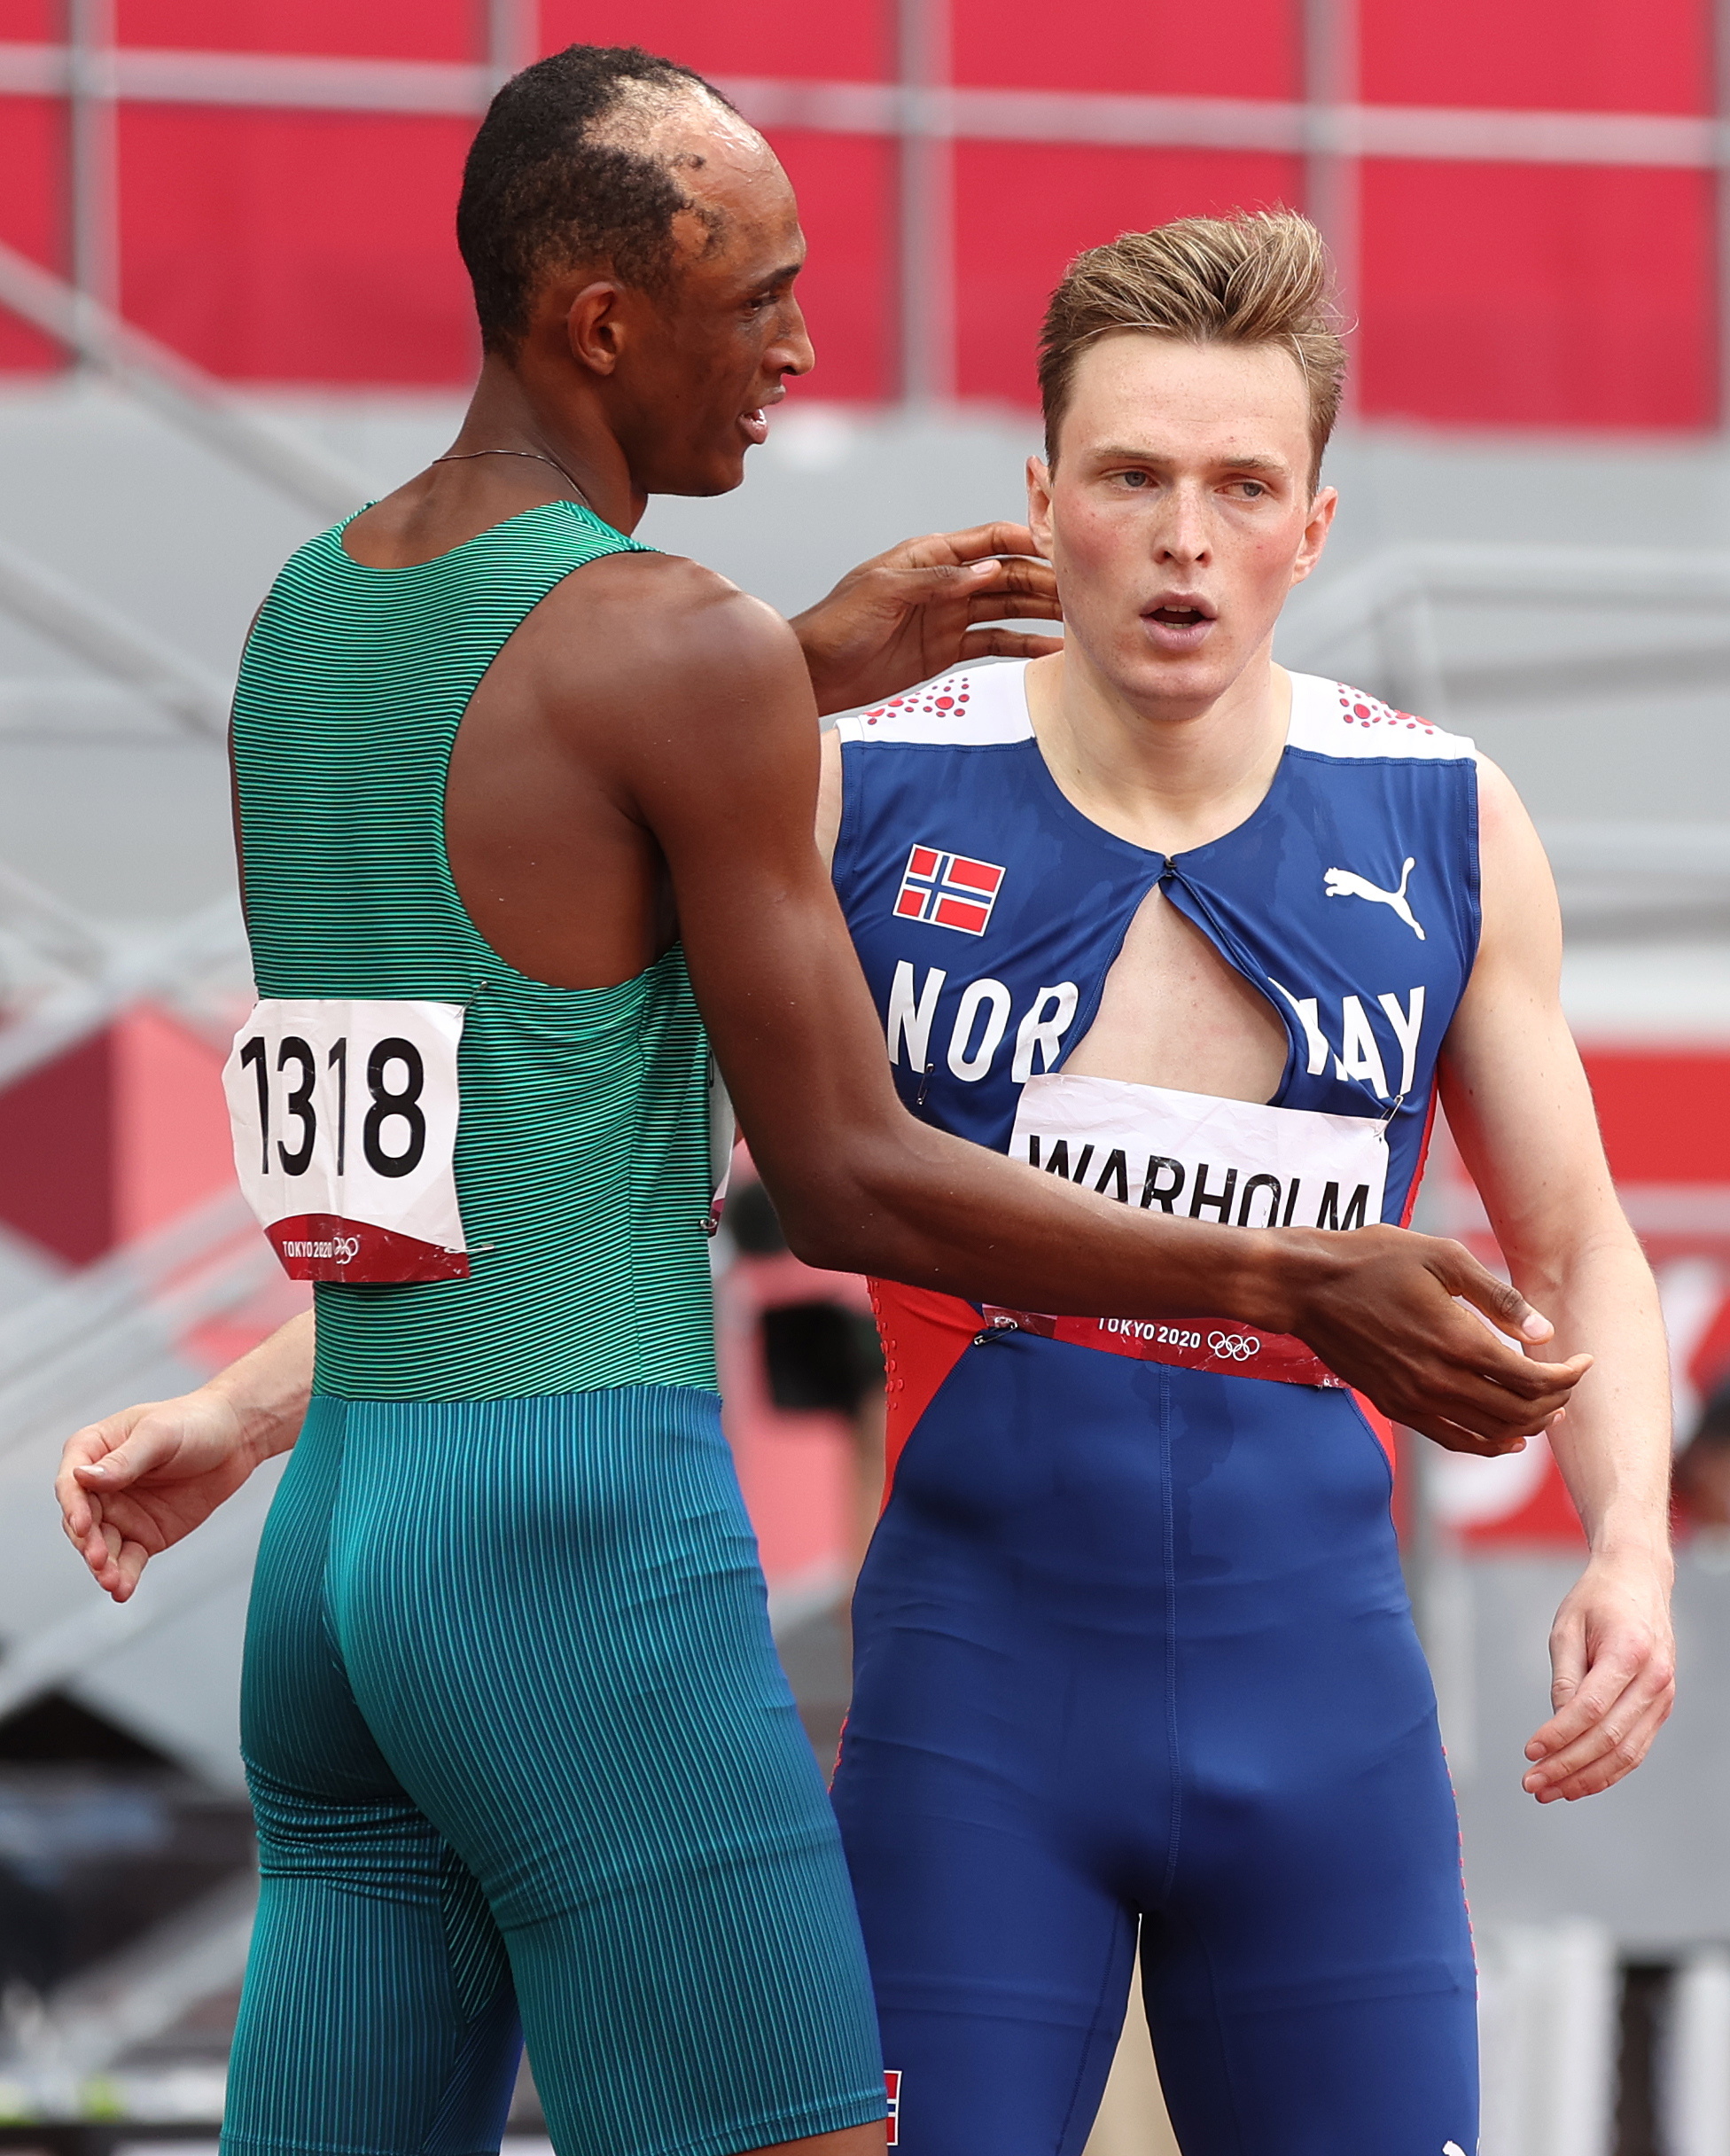 Karsten Warholm, World record, 400m hurdles, Olympic gold, 1960x2440 HD Handy